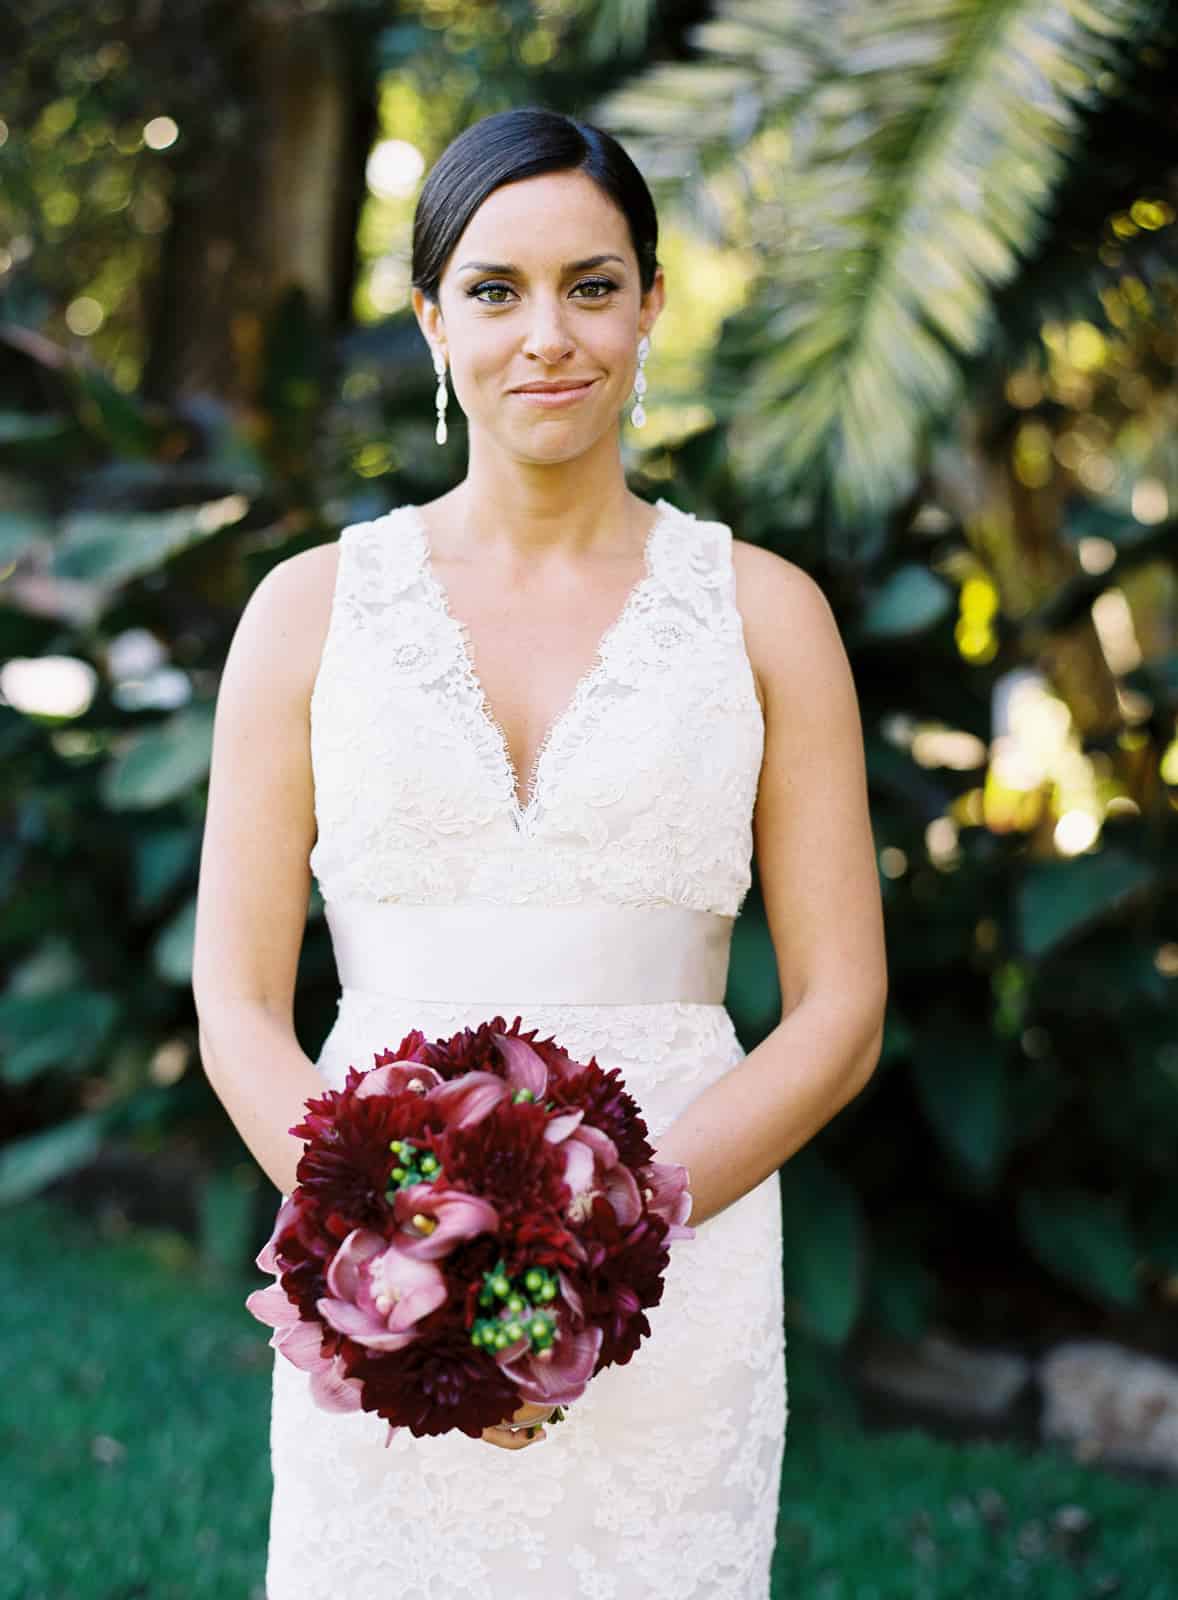 Bride portrait with maroon bouquet